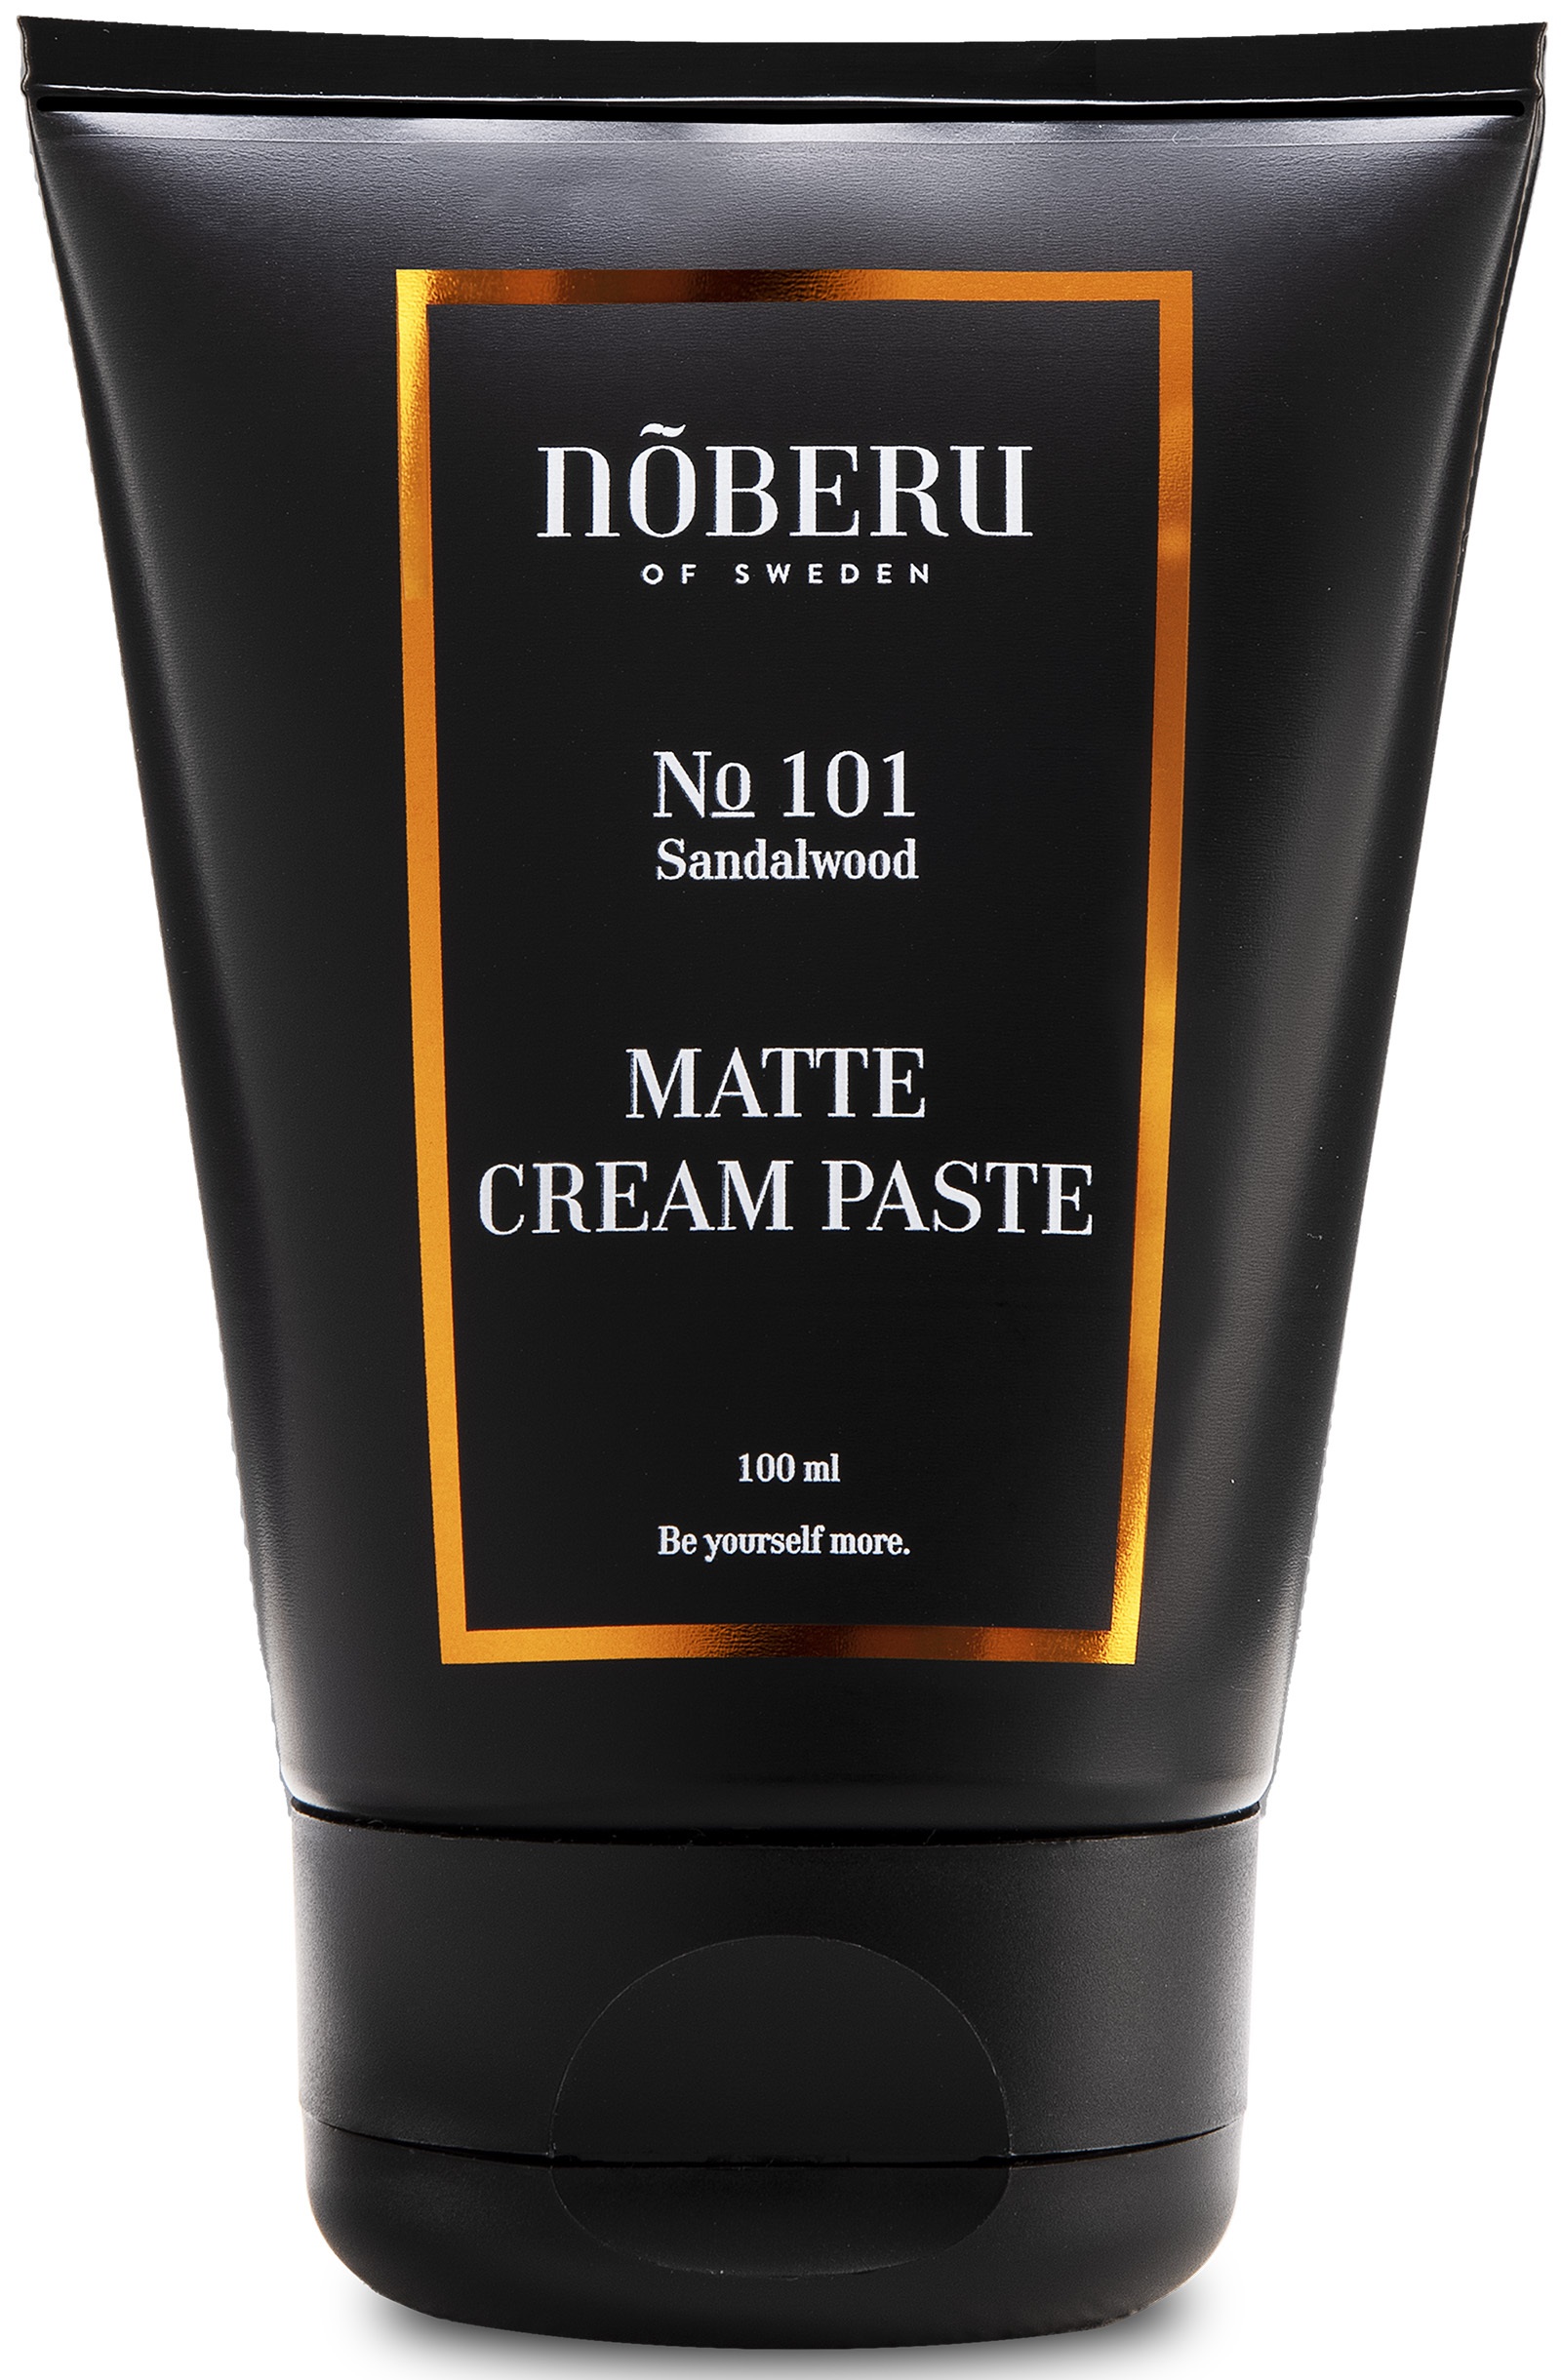 Noberu of Sweden Matte Cream Paste No 101 Sandalwood - matná krémová pasta, 100 ml